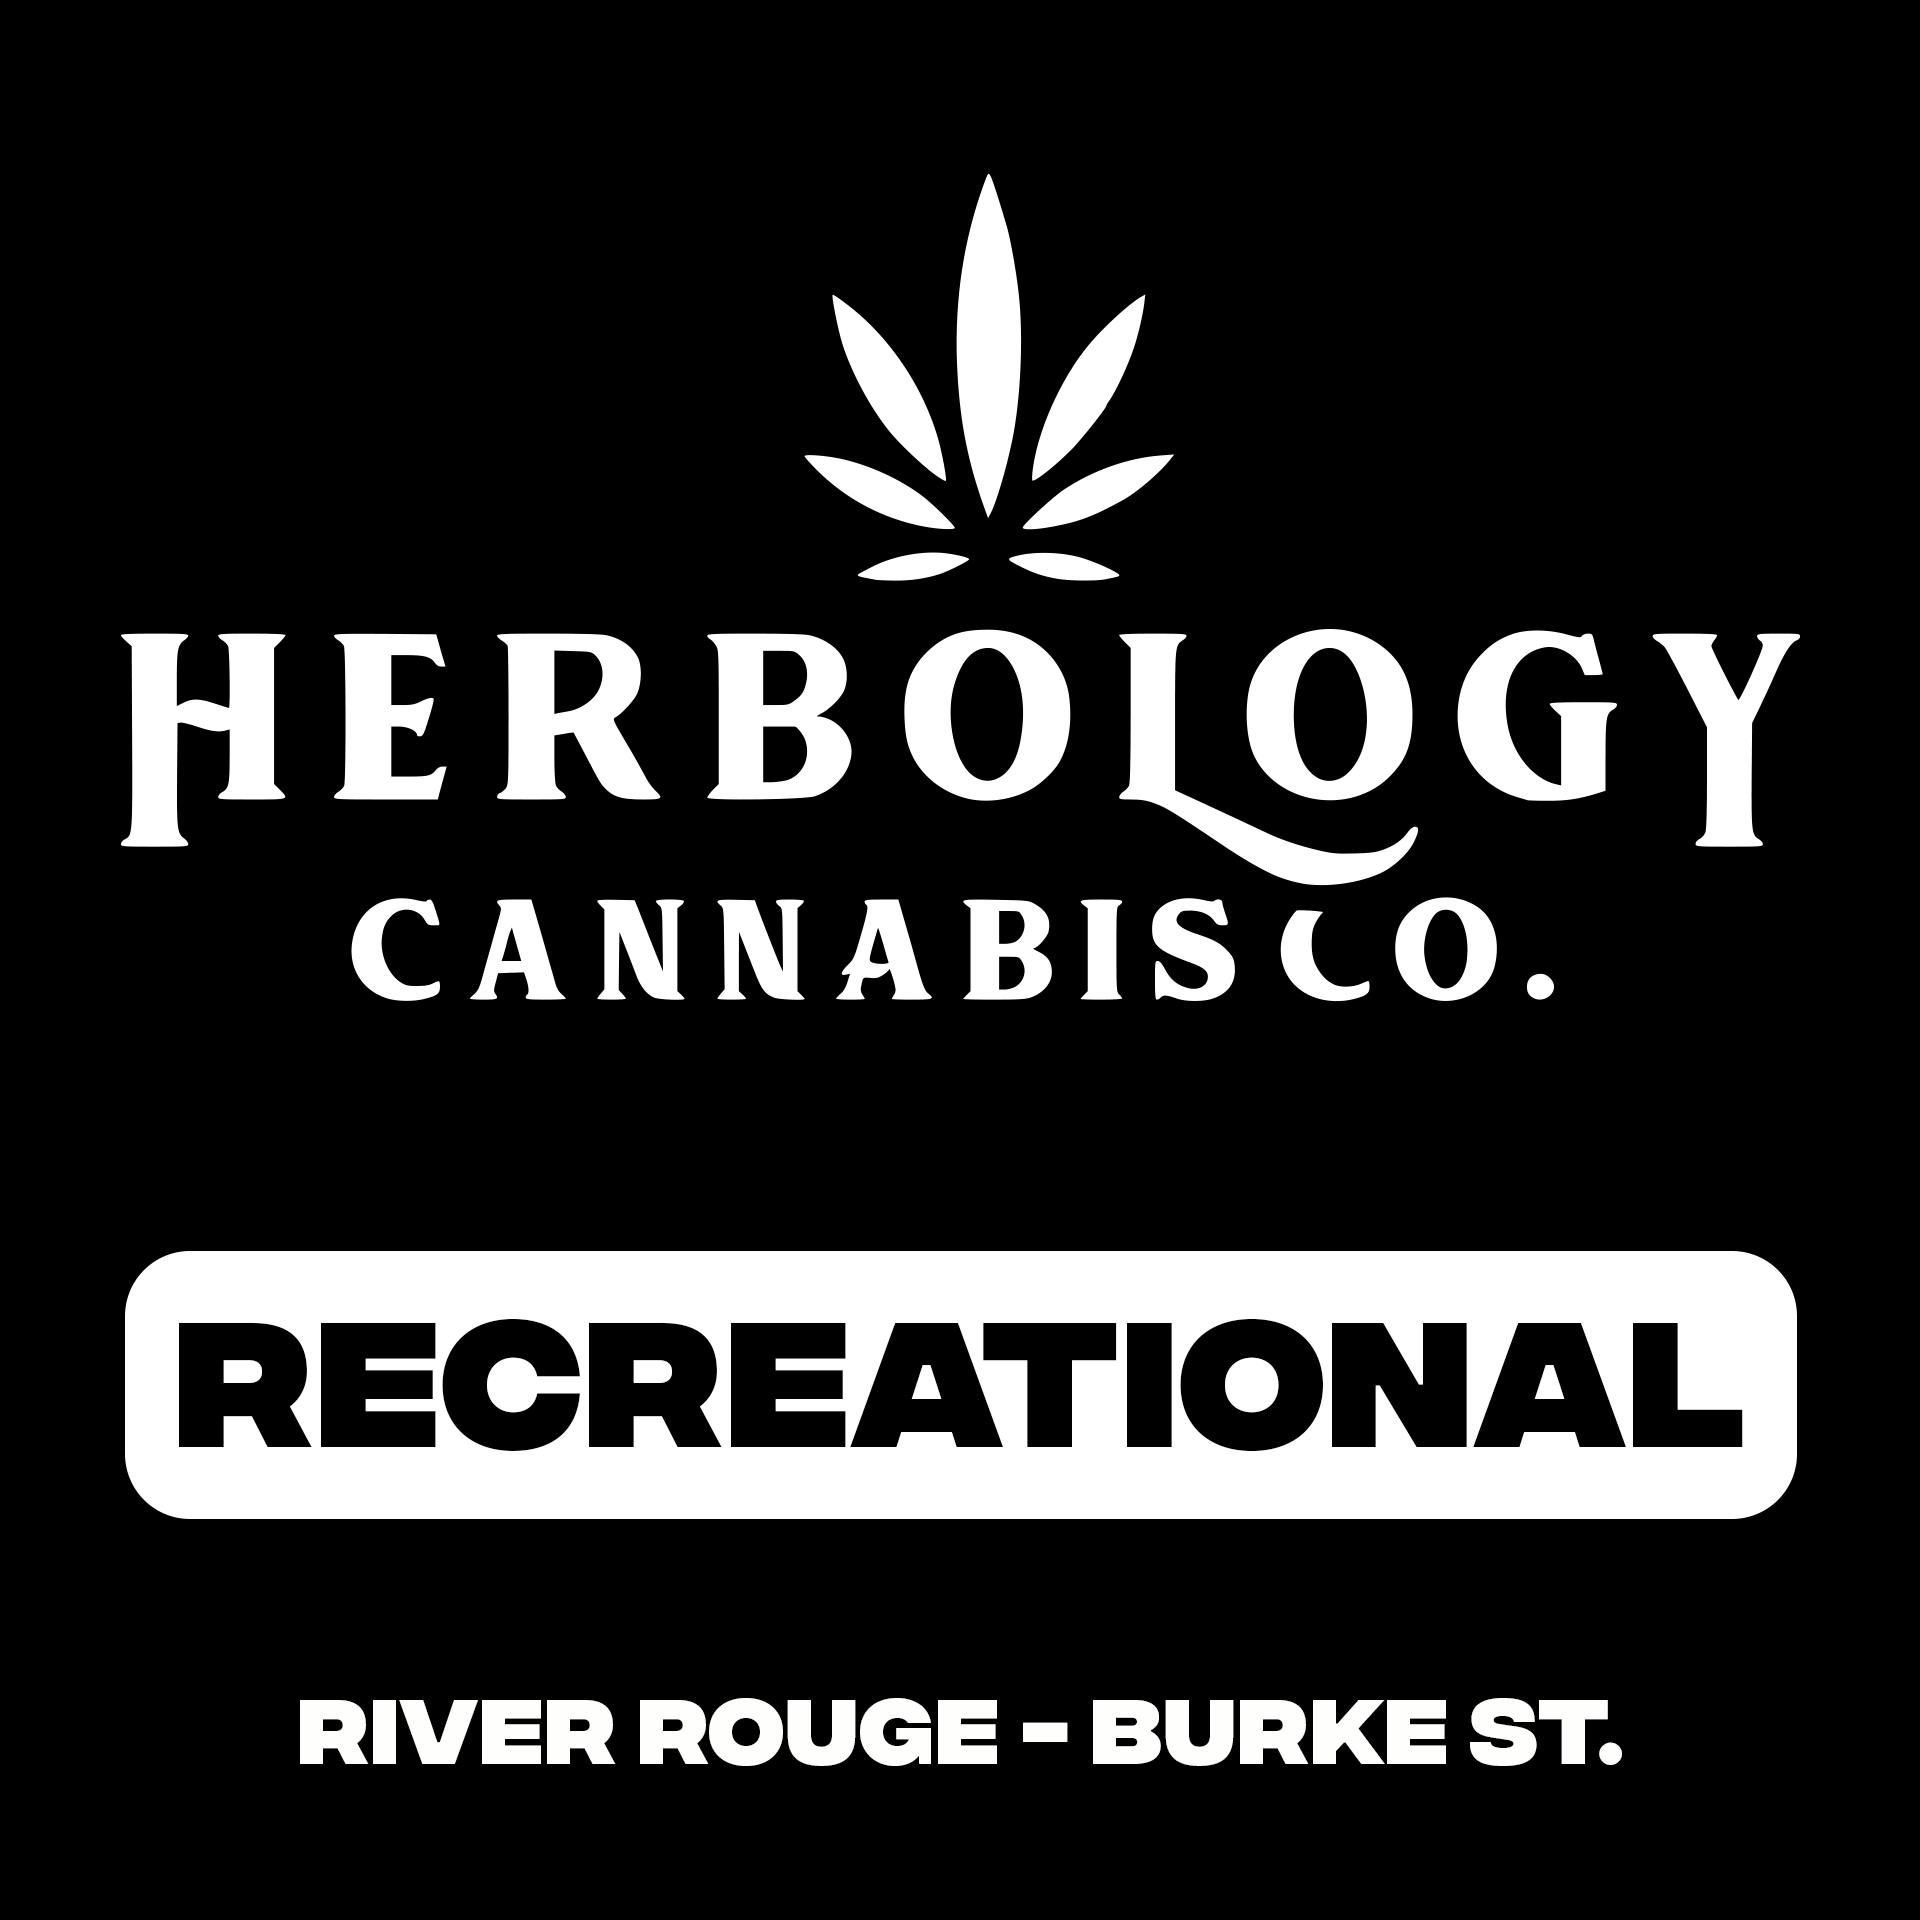 Herbology Cannabis Co. River Rouge - Burke St. - Recreational Cannabis Dispensary logo